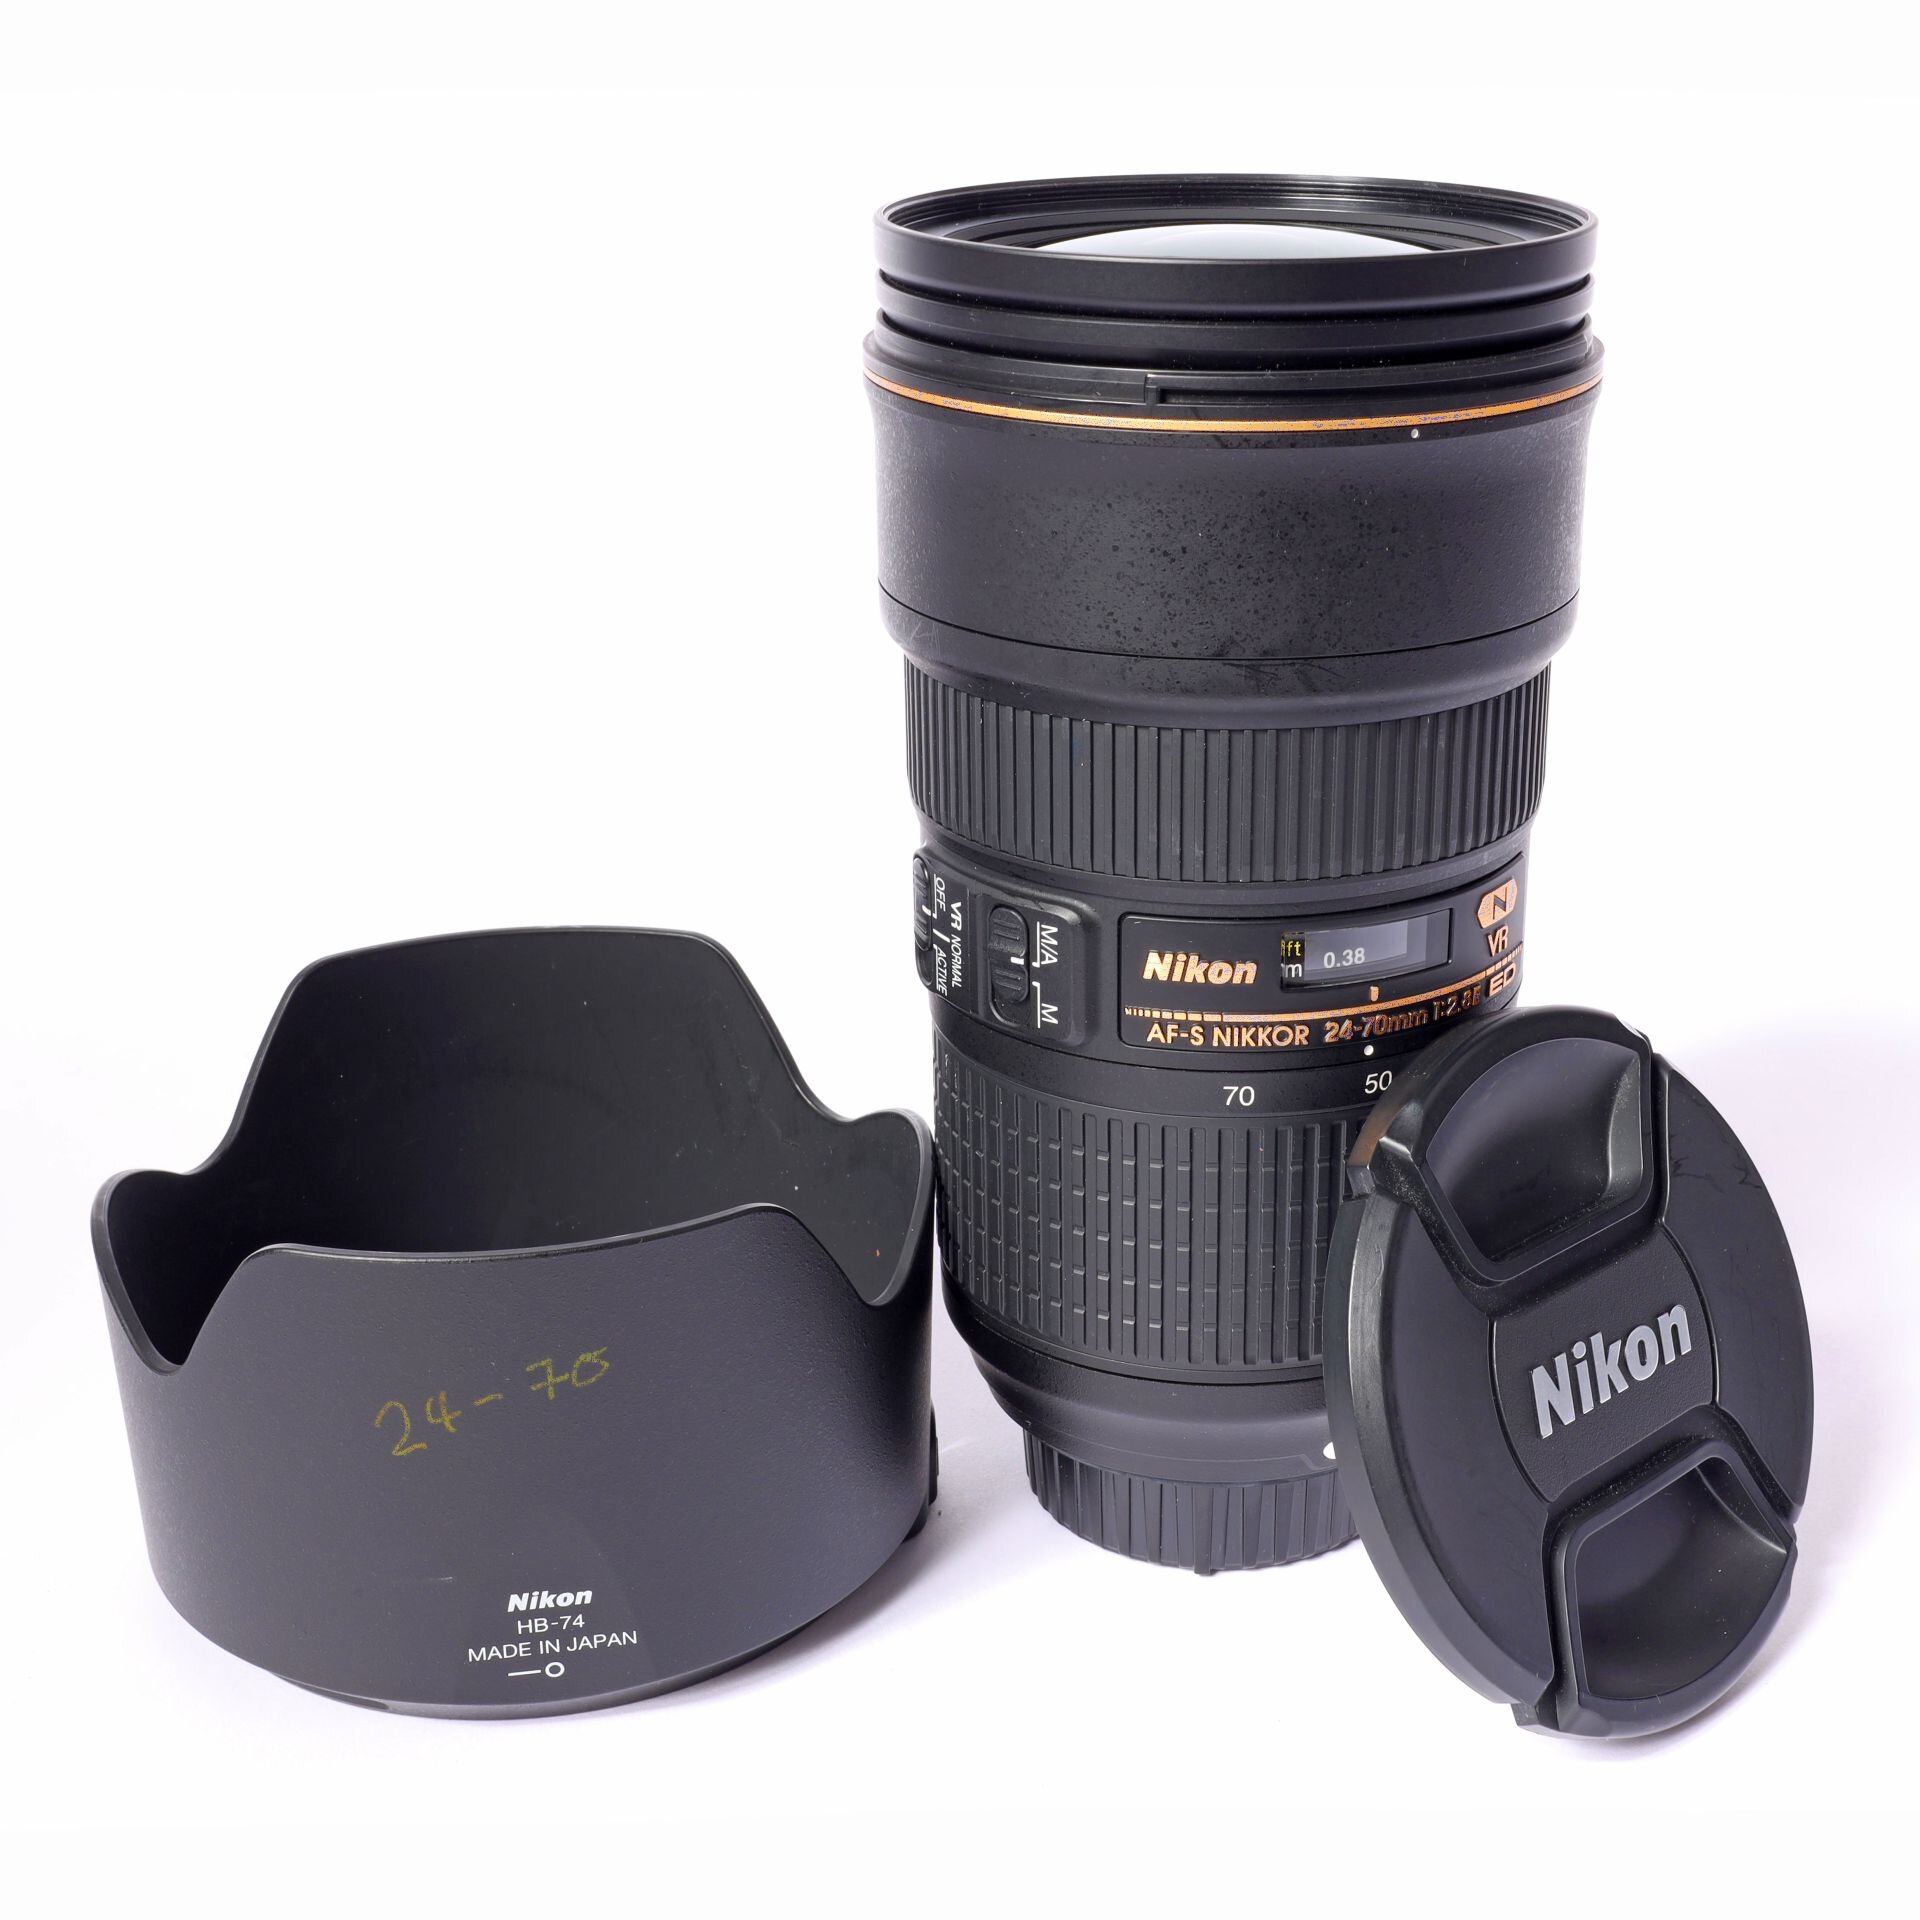 Nikon AFS Nikkor 2.8E/24-70mm ED VR